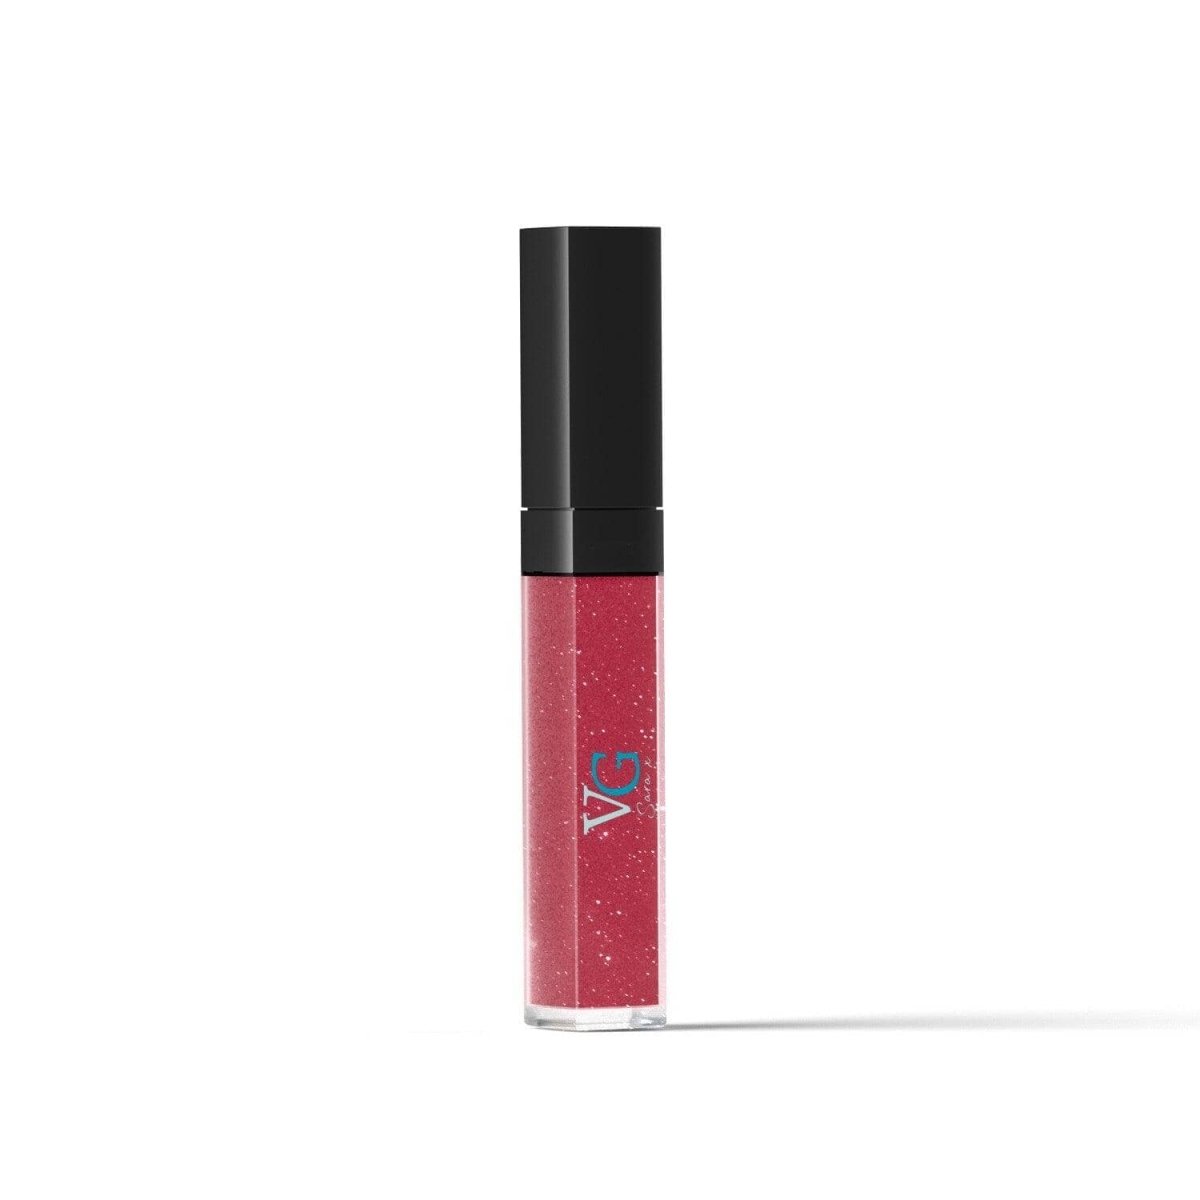 Vegan red lip gloss with a black cap, cruelty-free